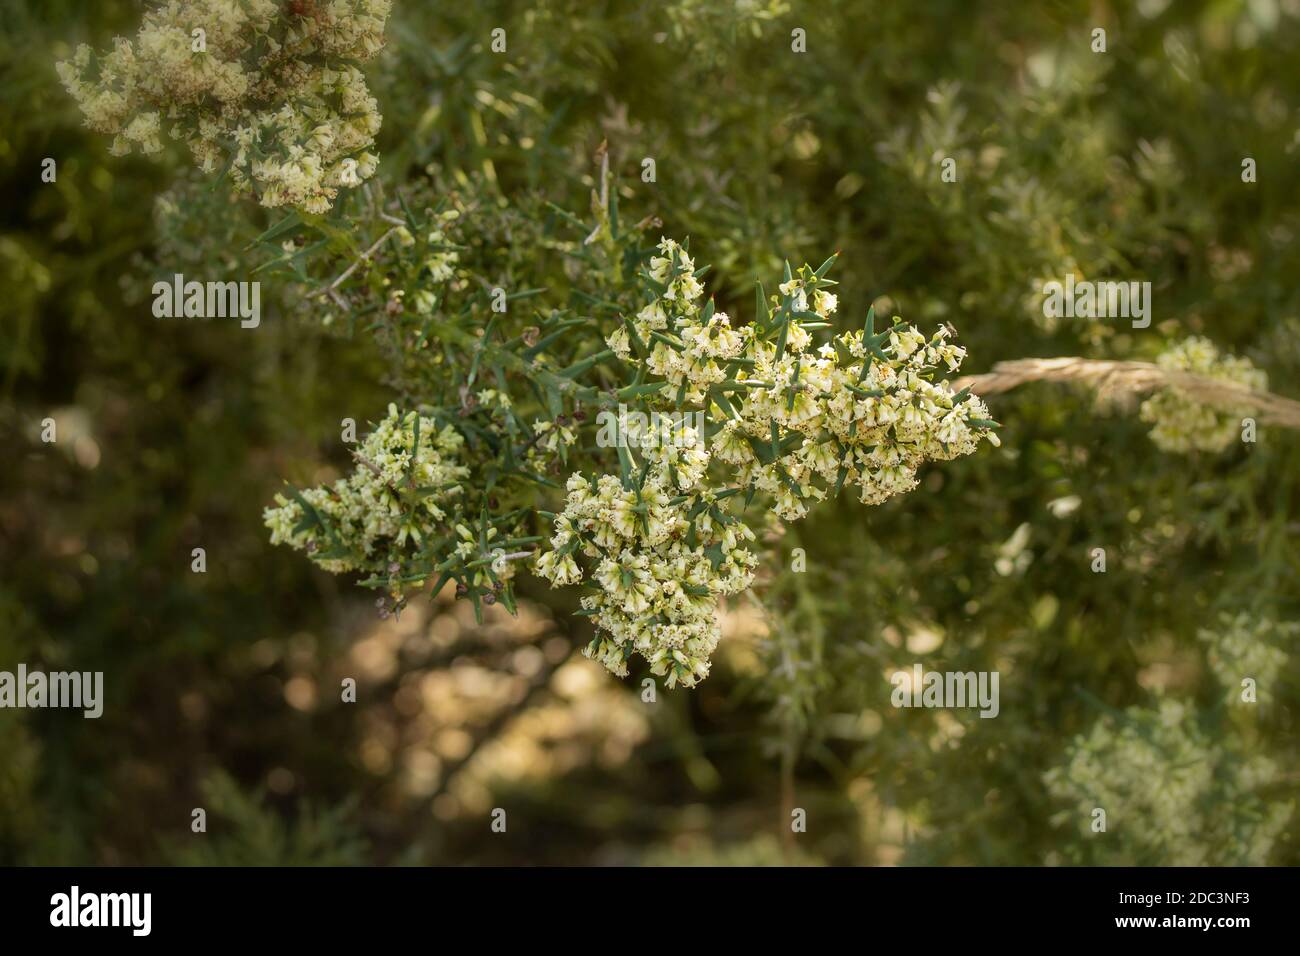 Fragrant Colletia Paradoxa small tree/ shrub flowering profusely Stock Photo